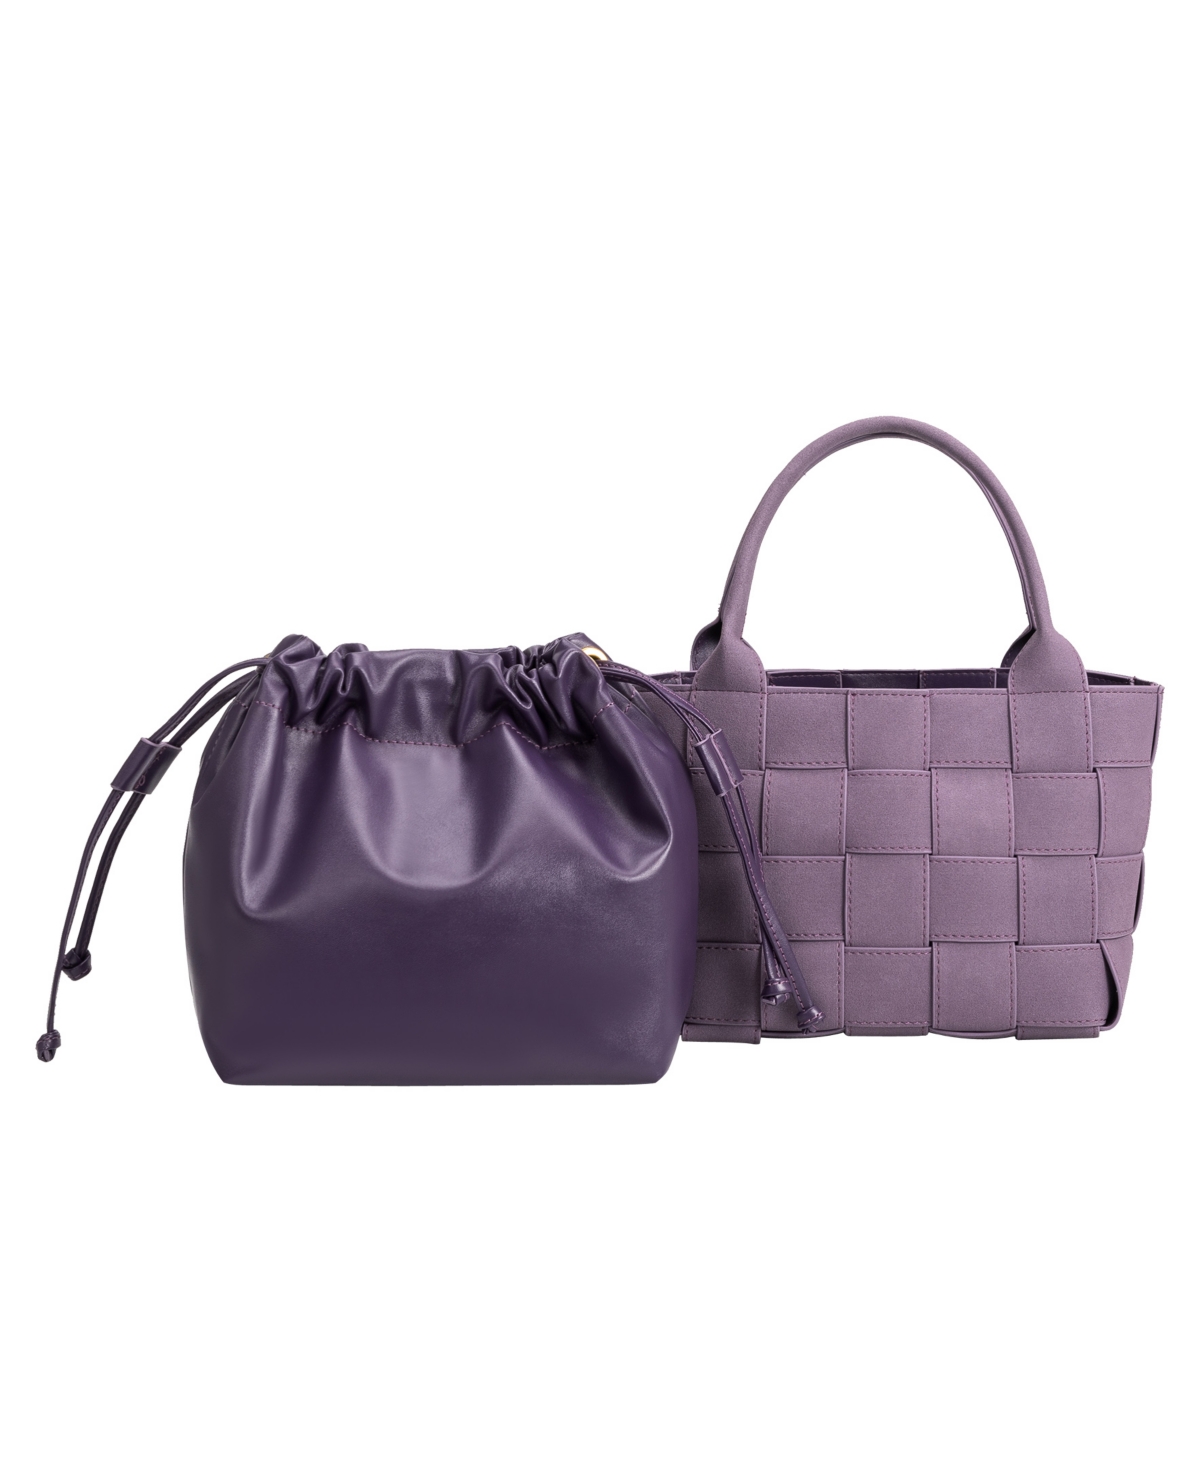 Melie Bianco Women's Lyndsey Tote Bag In Lavender